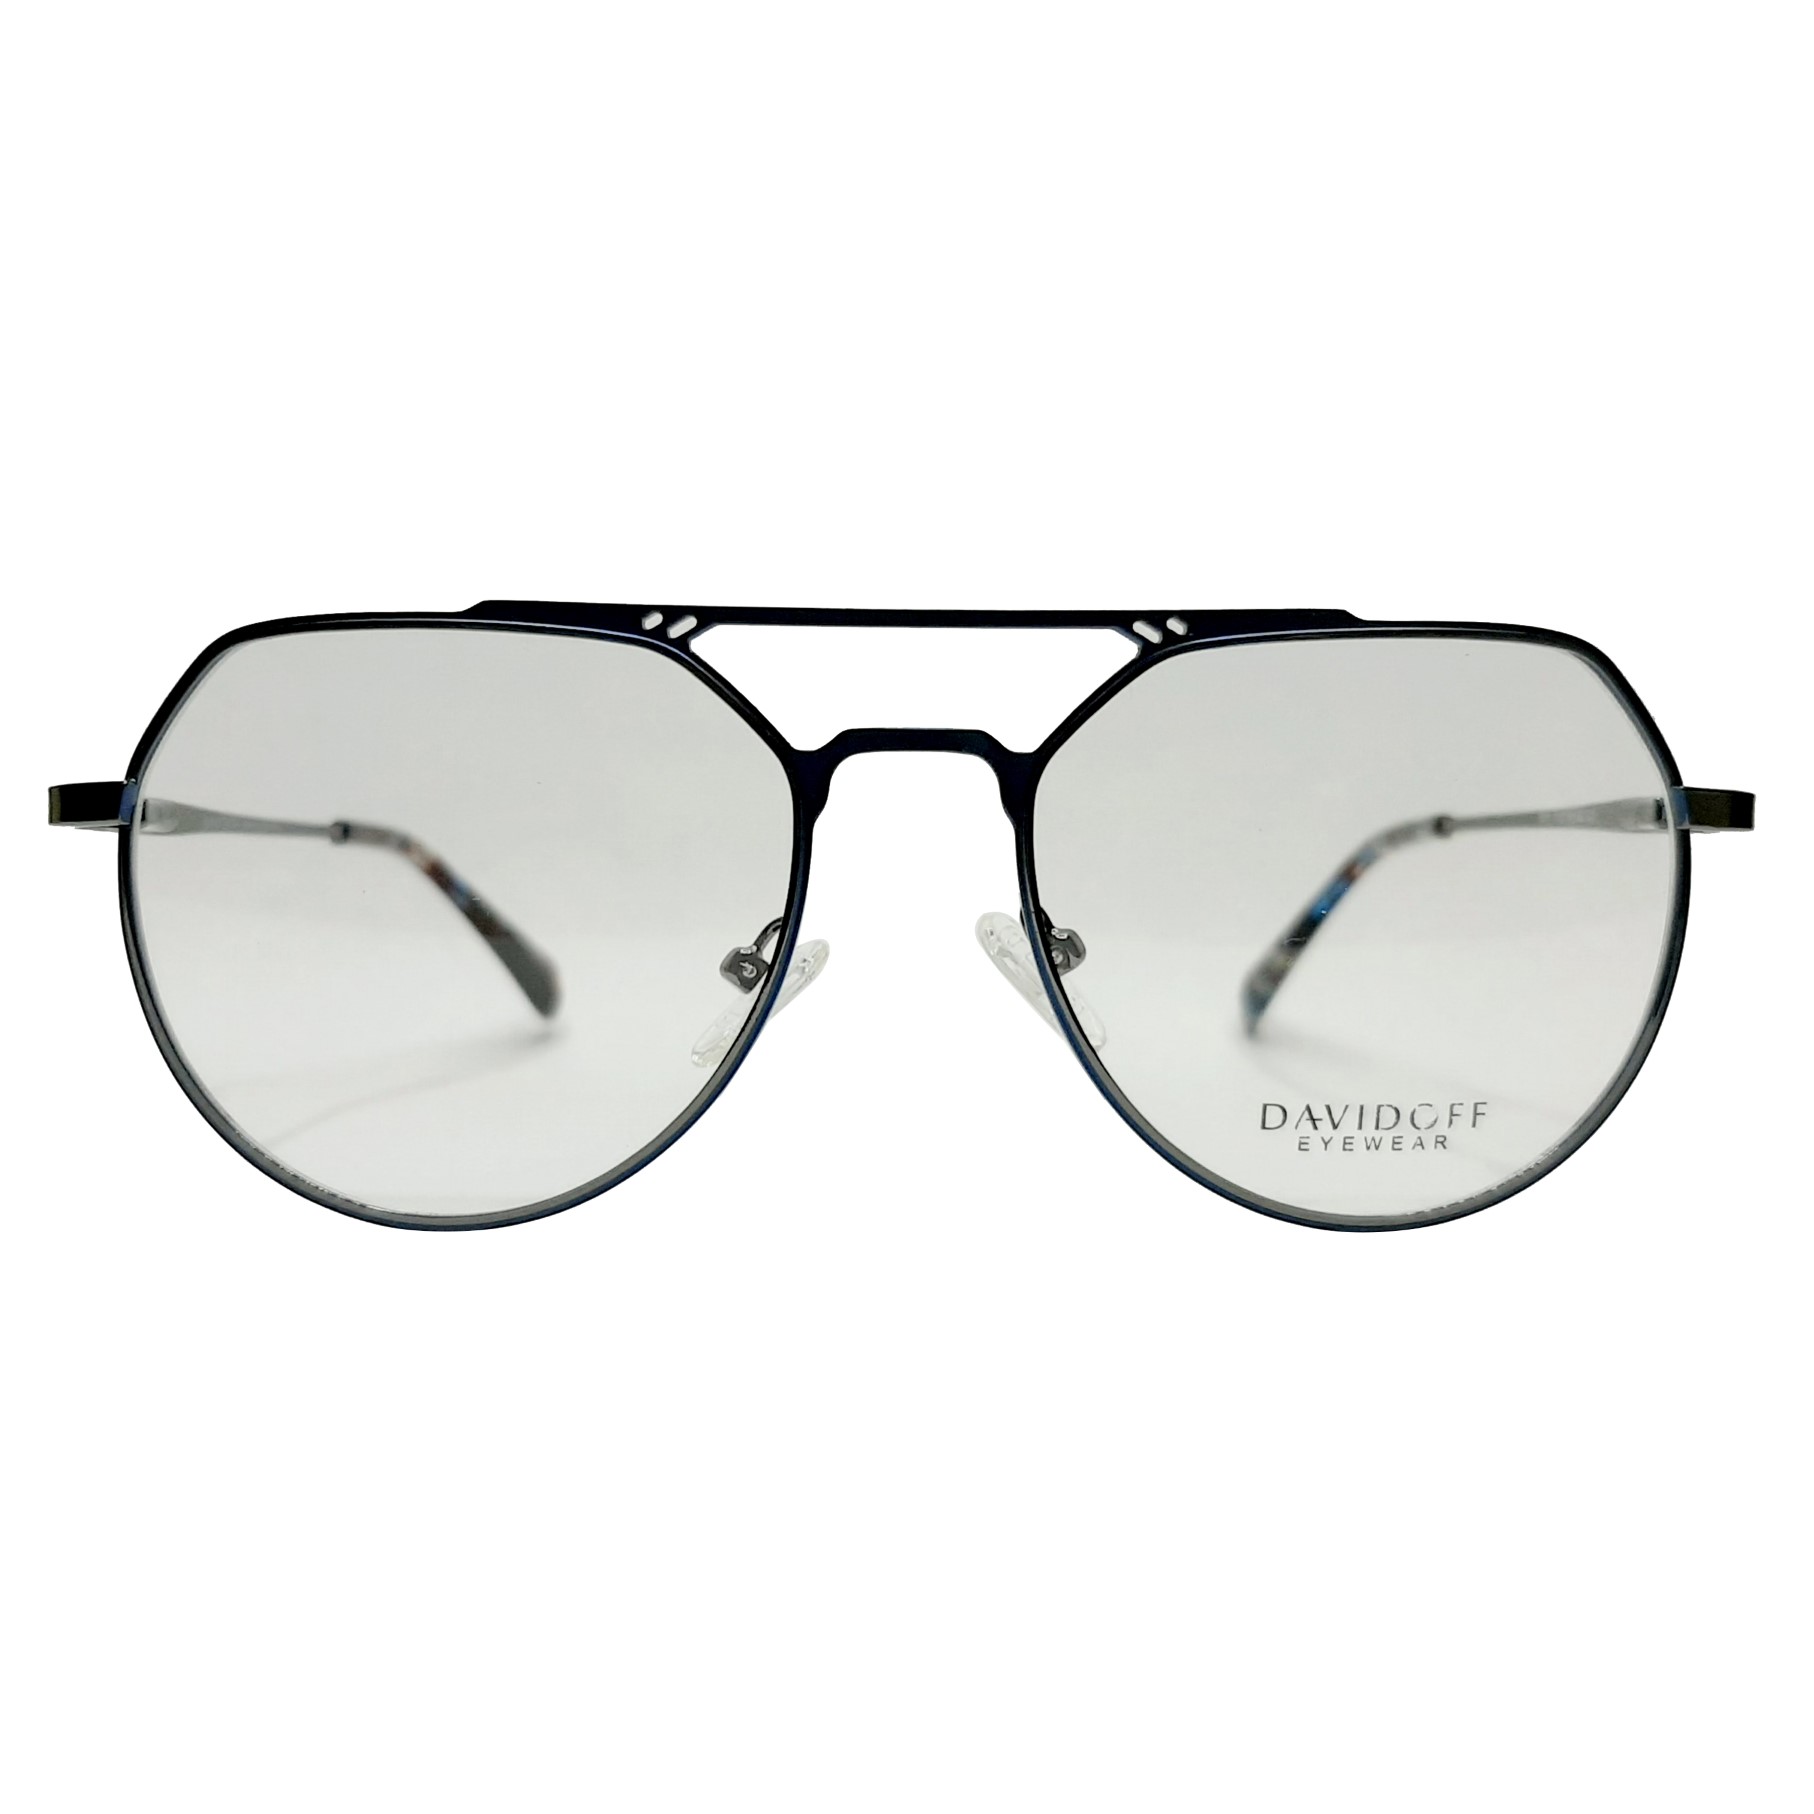 فریم عینک طبی داویدف مدل D8291c3